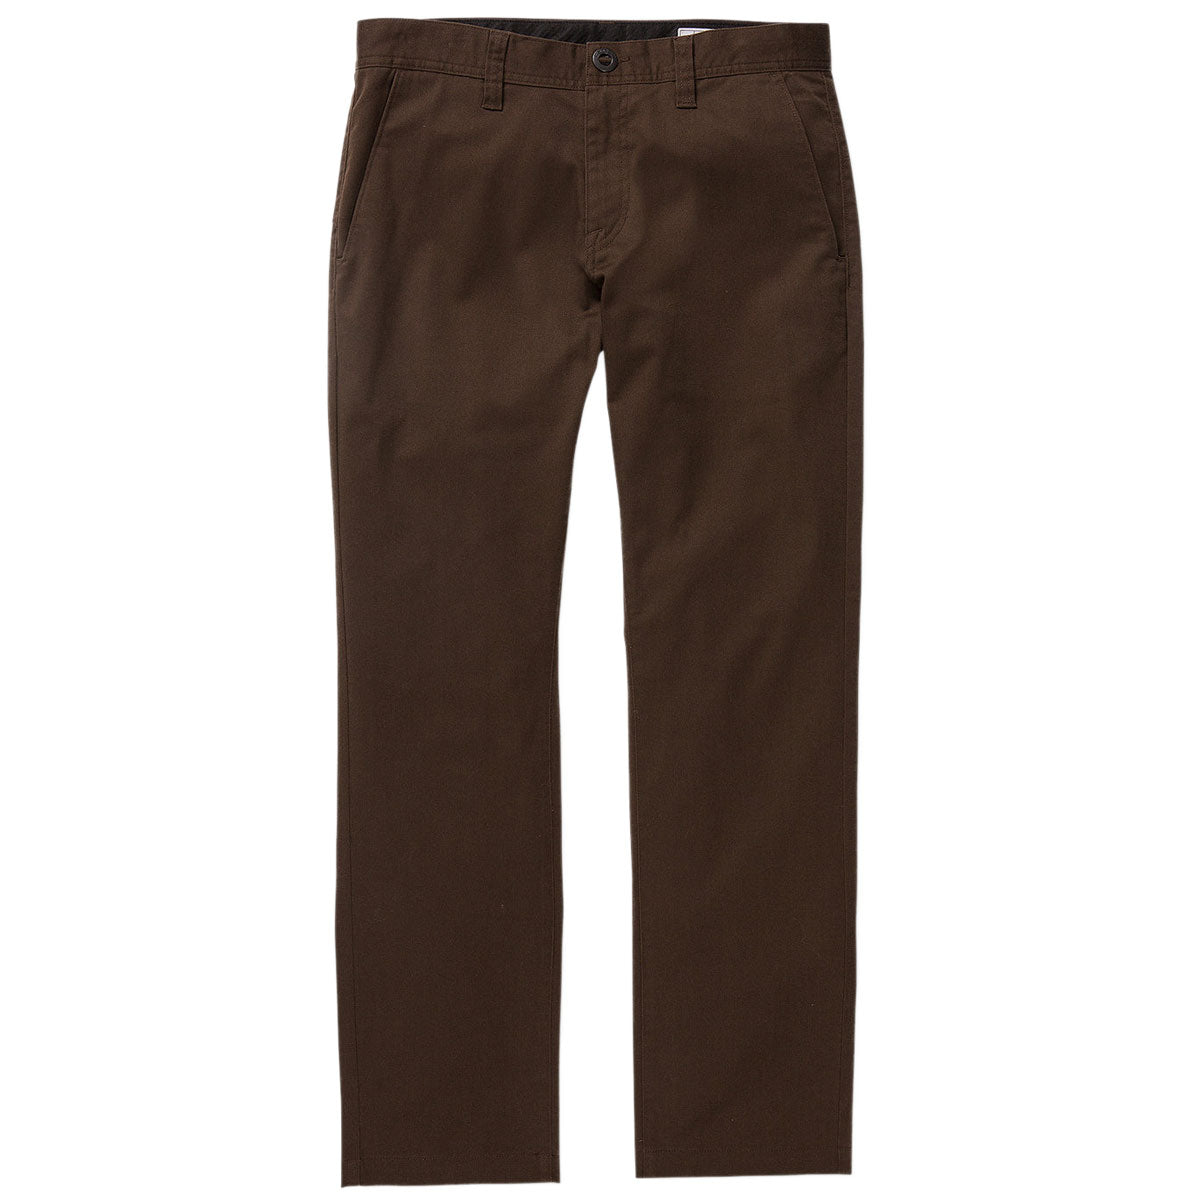 Volcom Frickin Modern Stretch Pants - Dark Brown image 1